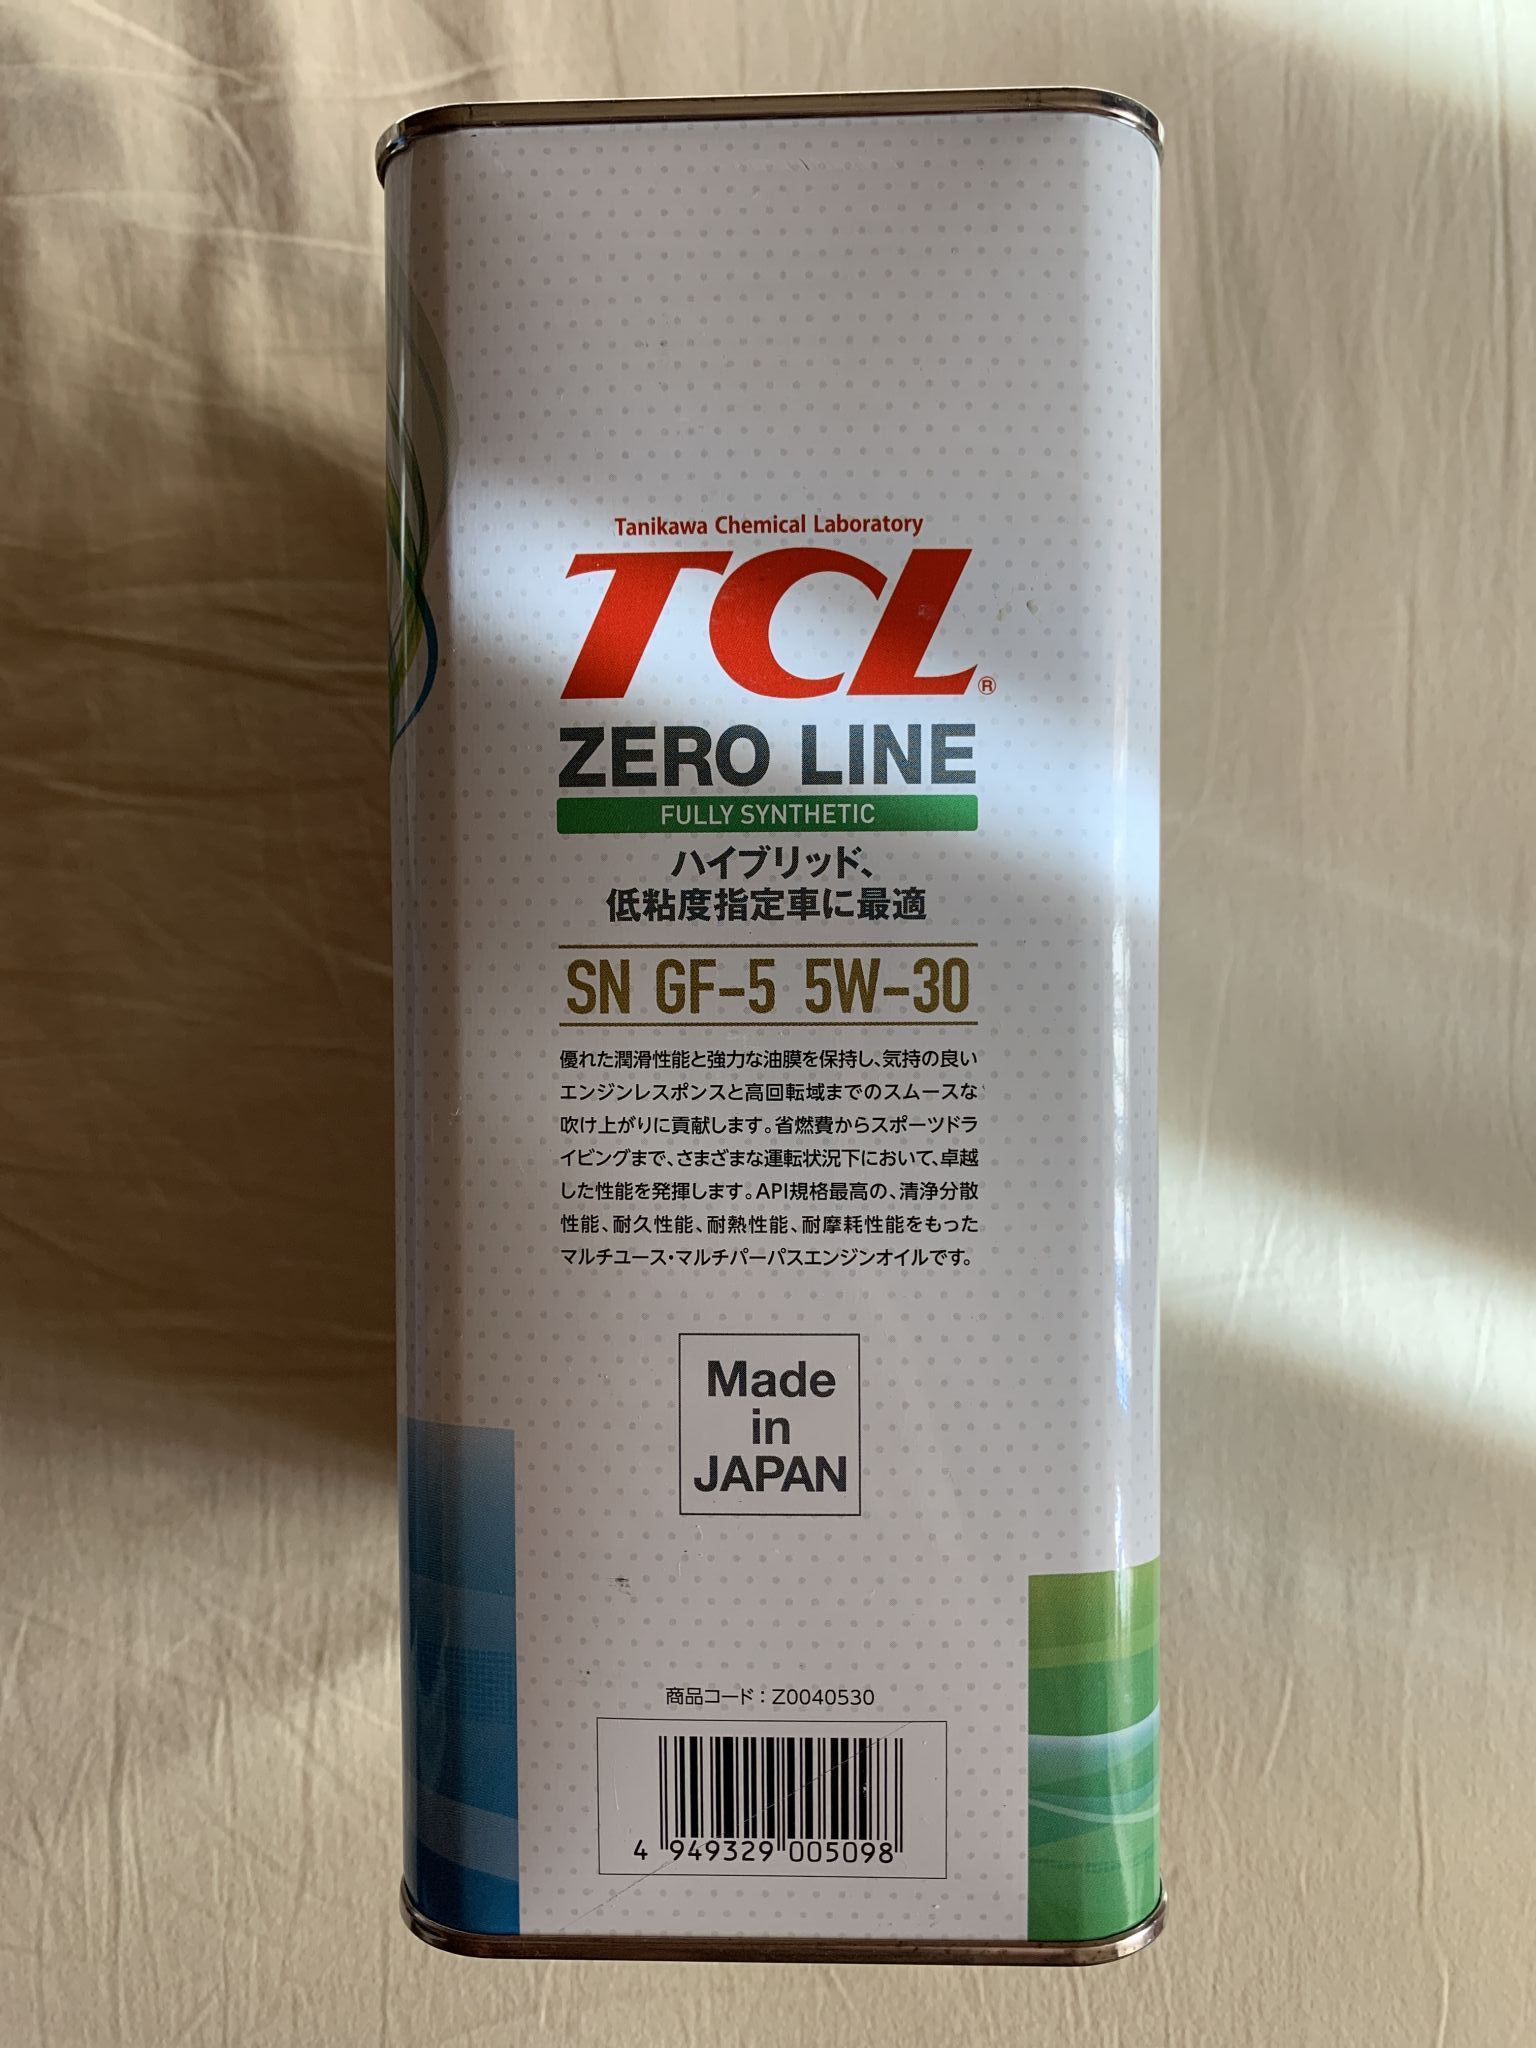 Масло Zero line 5w30. Полка масло TCL. TCL масло сравнительные тесты. TCL Zero line 5w-30 SN/gf-5 цены. Моторное масло tcl 5w30